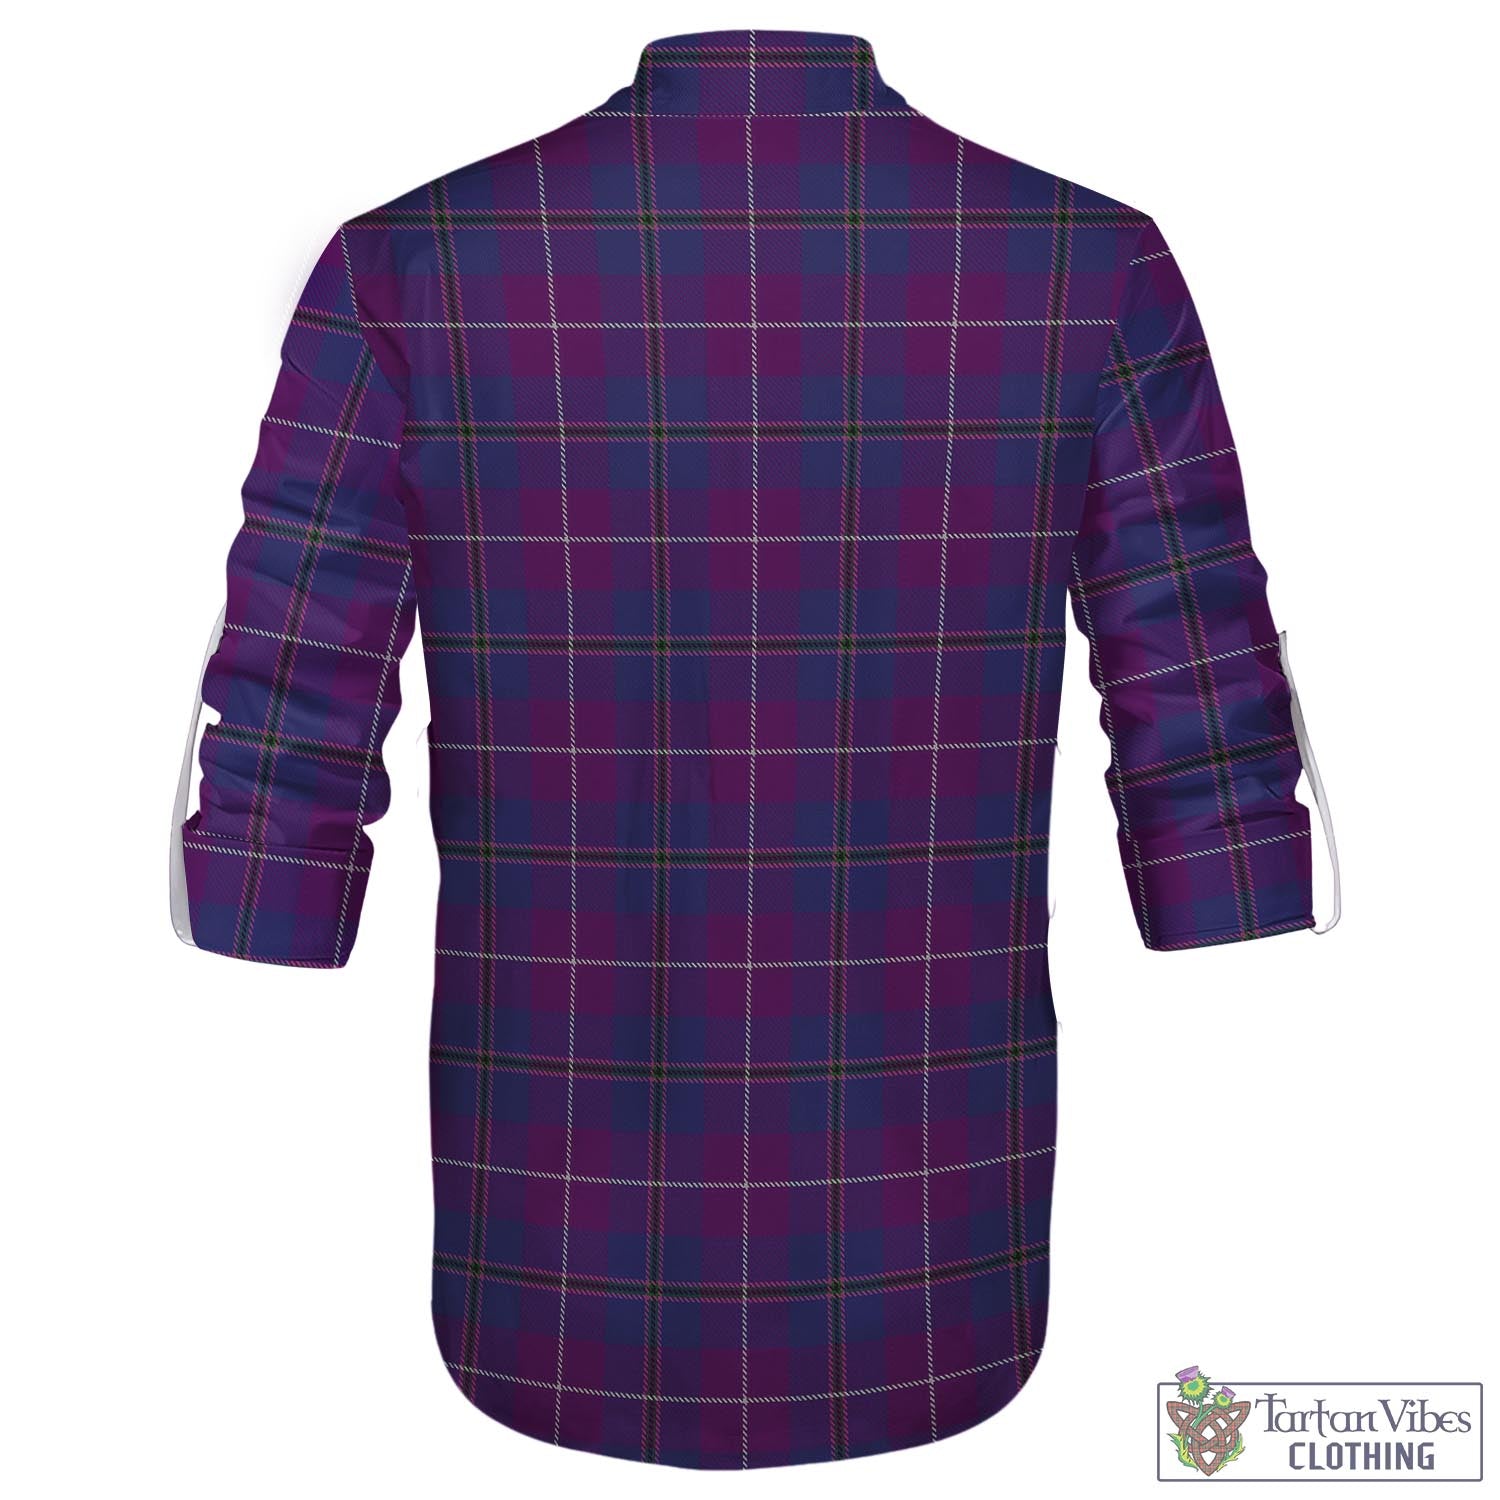 Tartan Vibes Clothing Glencoe Tartan Men's Scottish Traditional Jacobite Ghillie Kilt Shirt